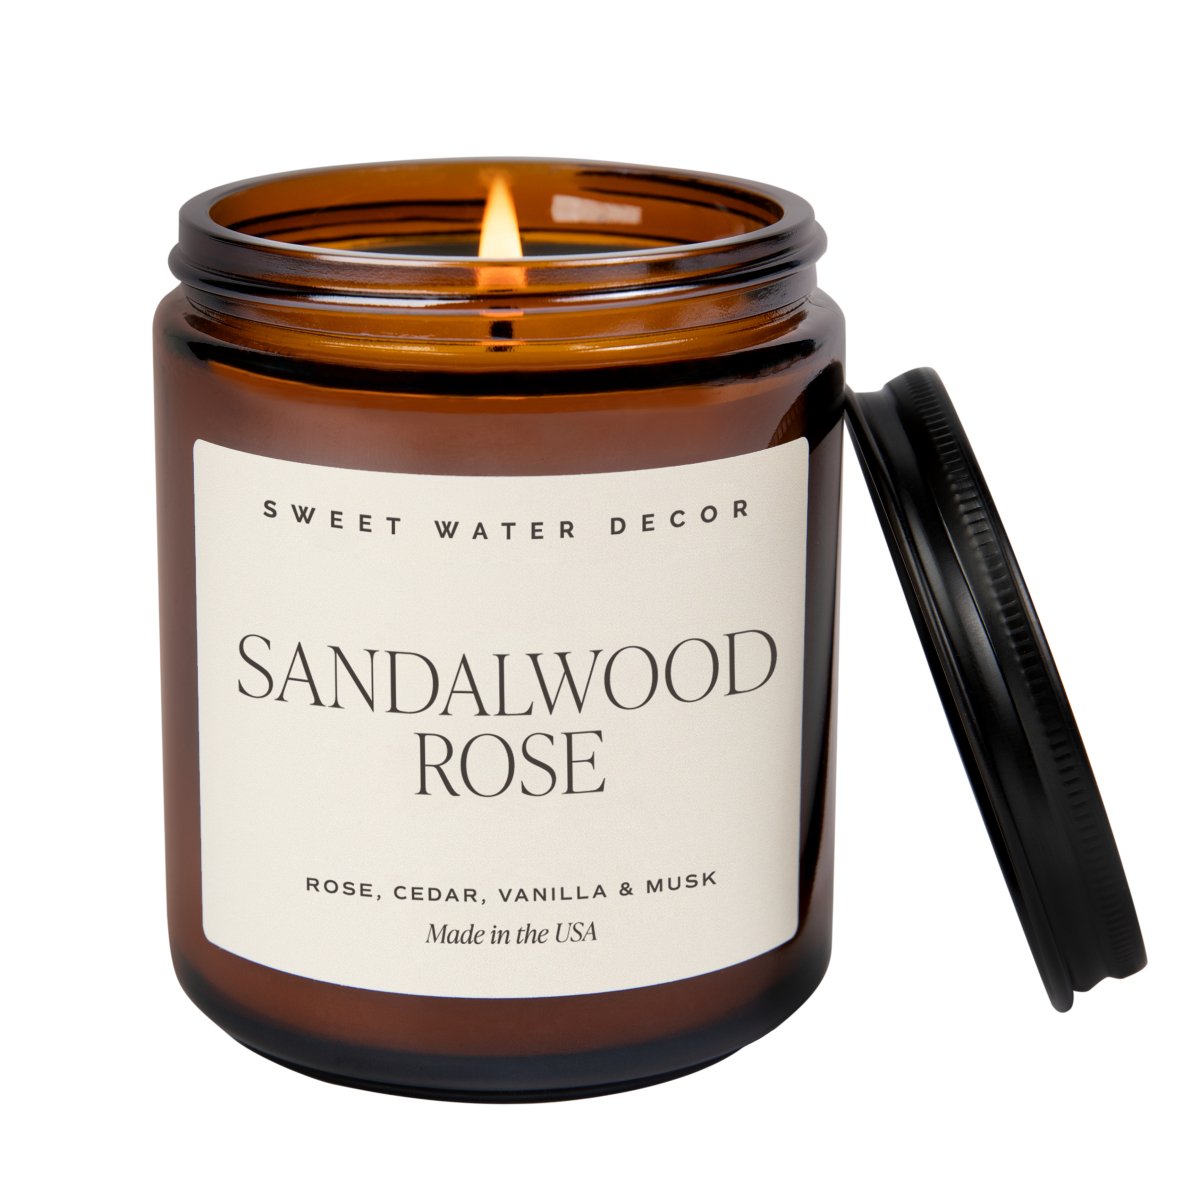 Sweet Water Decor Sandalwood Rose Soy Candle - Amber Jar - 9 oz - lily & onyx